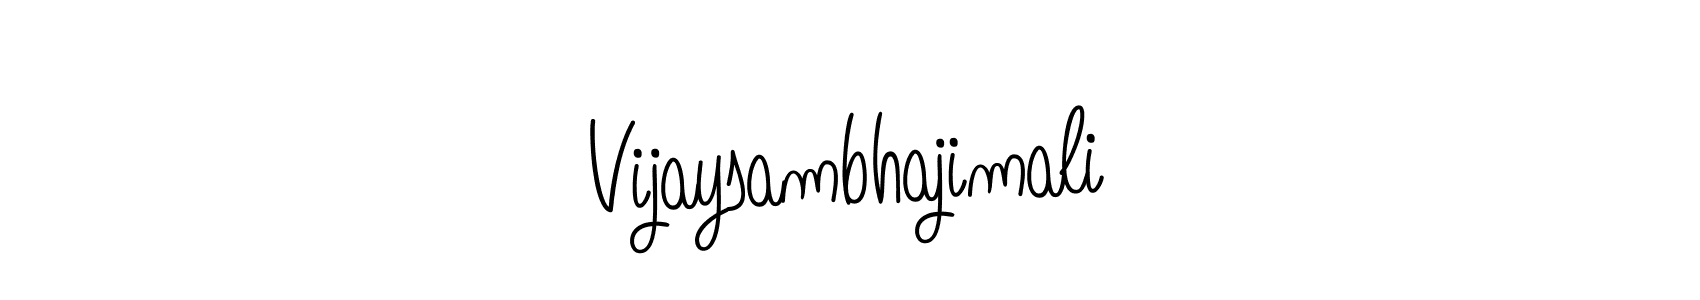 Make a beautiful signature design for name Vijaysambhajimali. Use this online signature maker to create a handwritten signature for free. Vijaysambhajimali signature style 5 images and pictures png